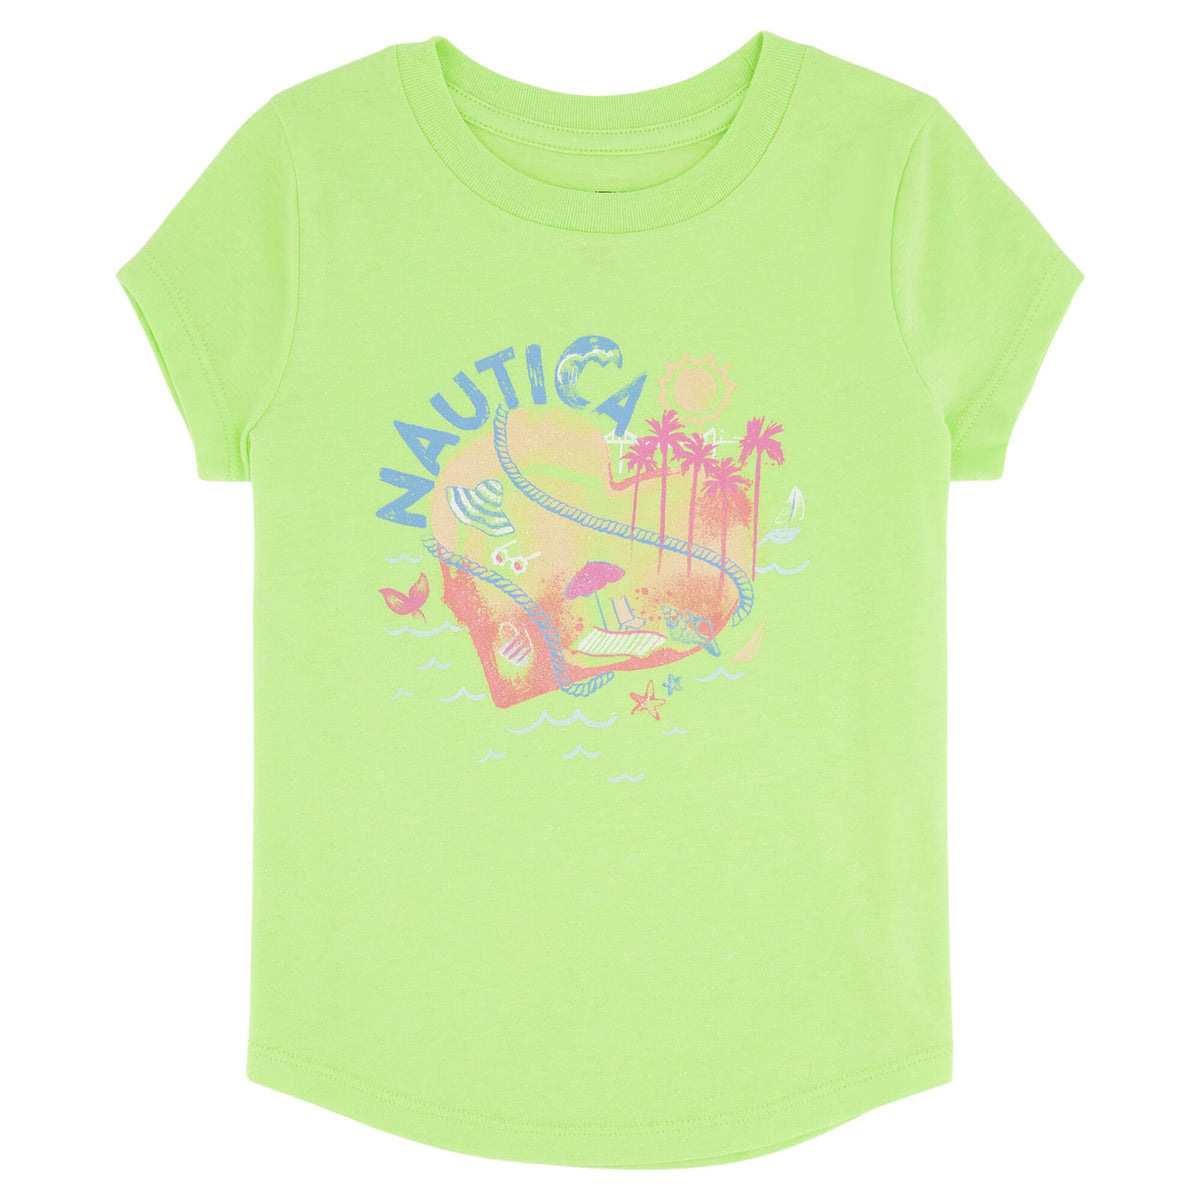 Nautica Little Girls' Nautica Island T-Shirt Biscay Teal